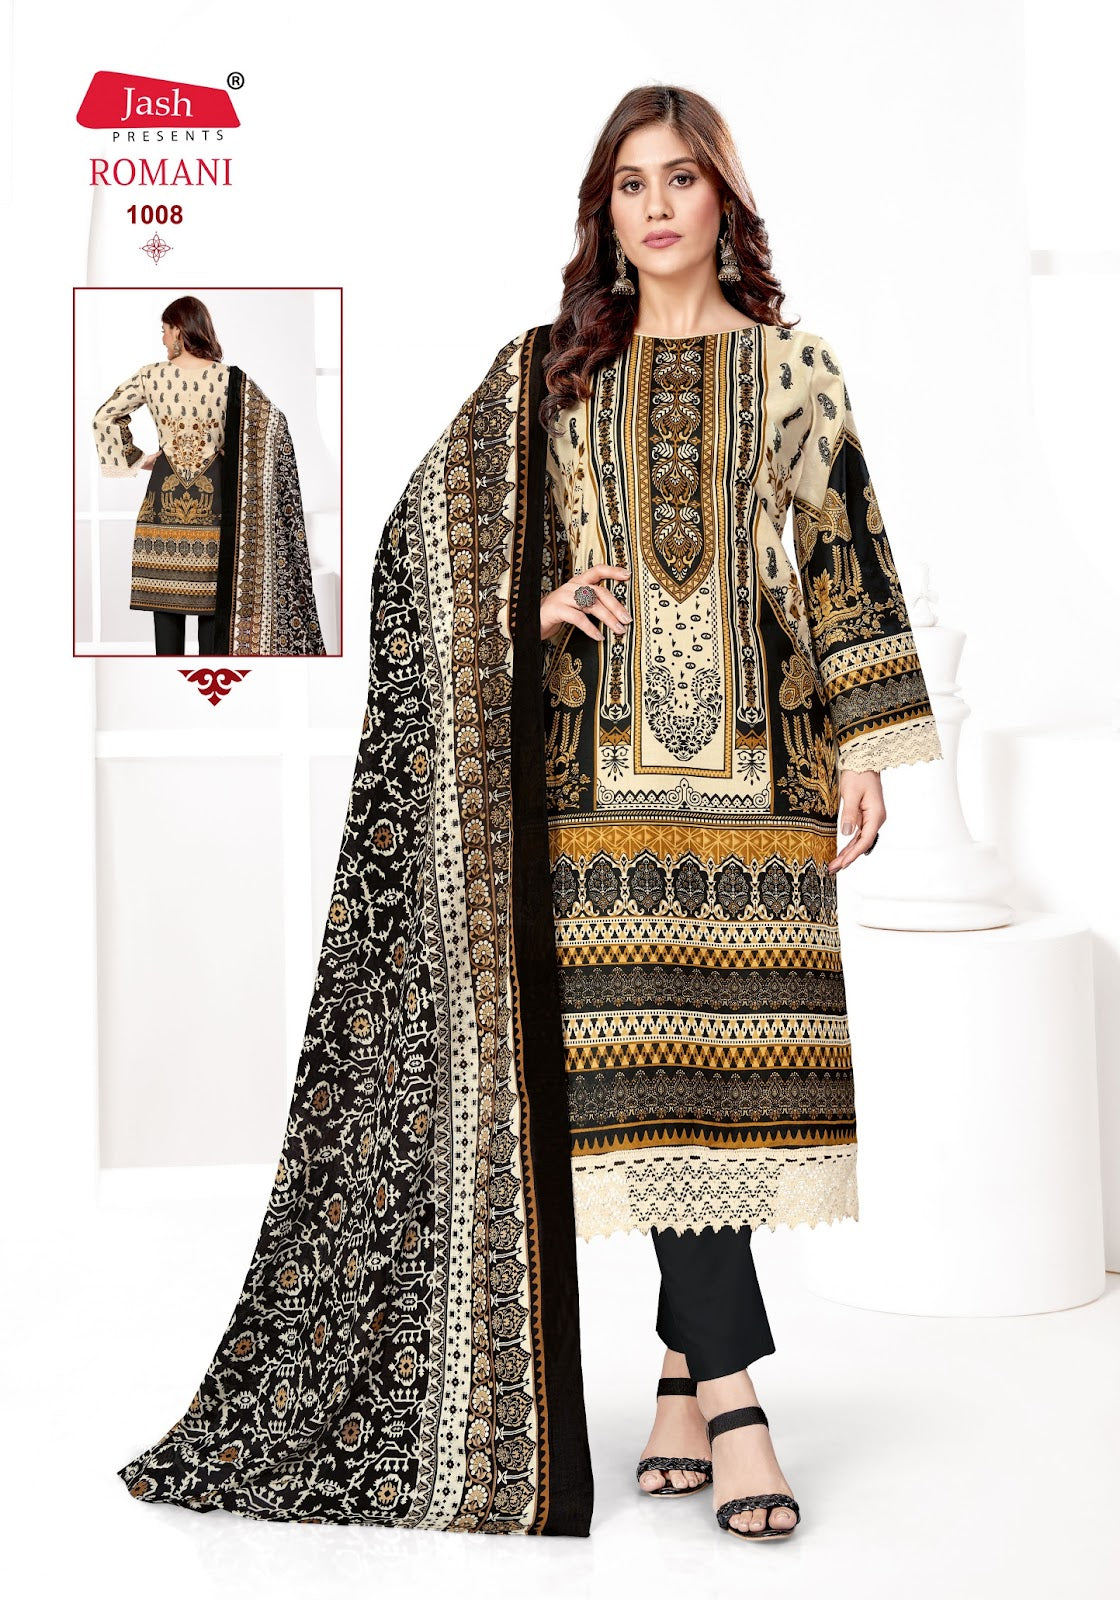 Romani Vol 1 Jash Cotton Dress Material